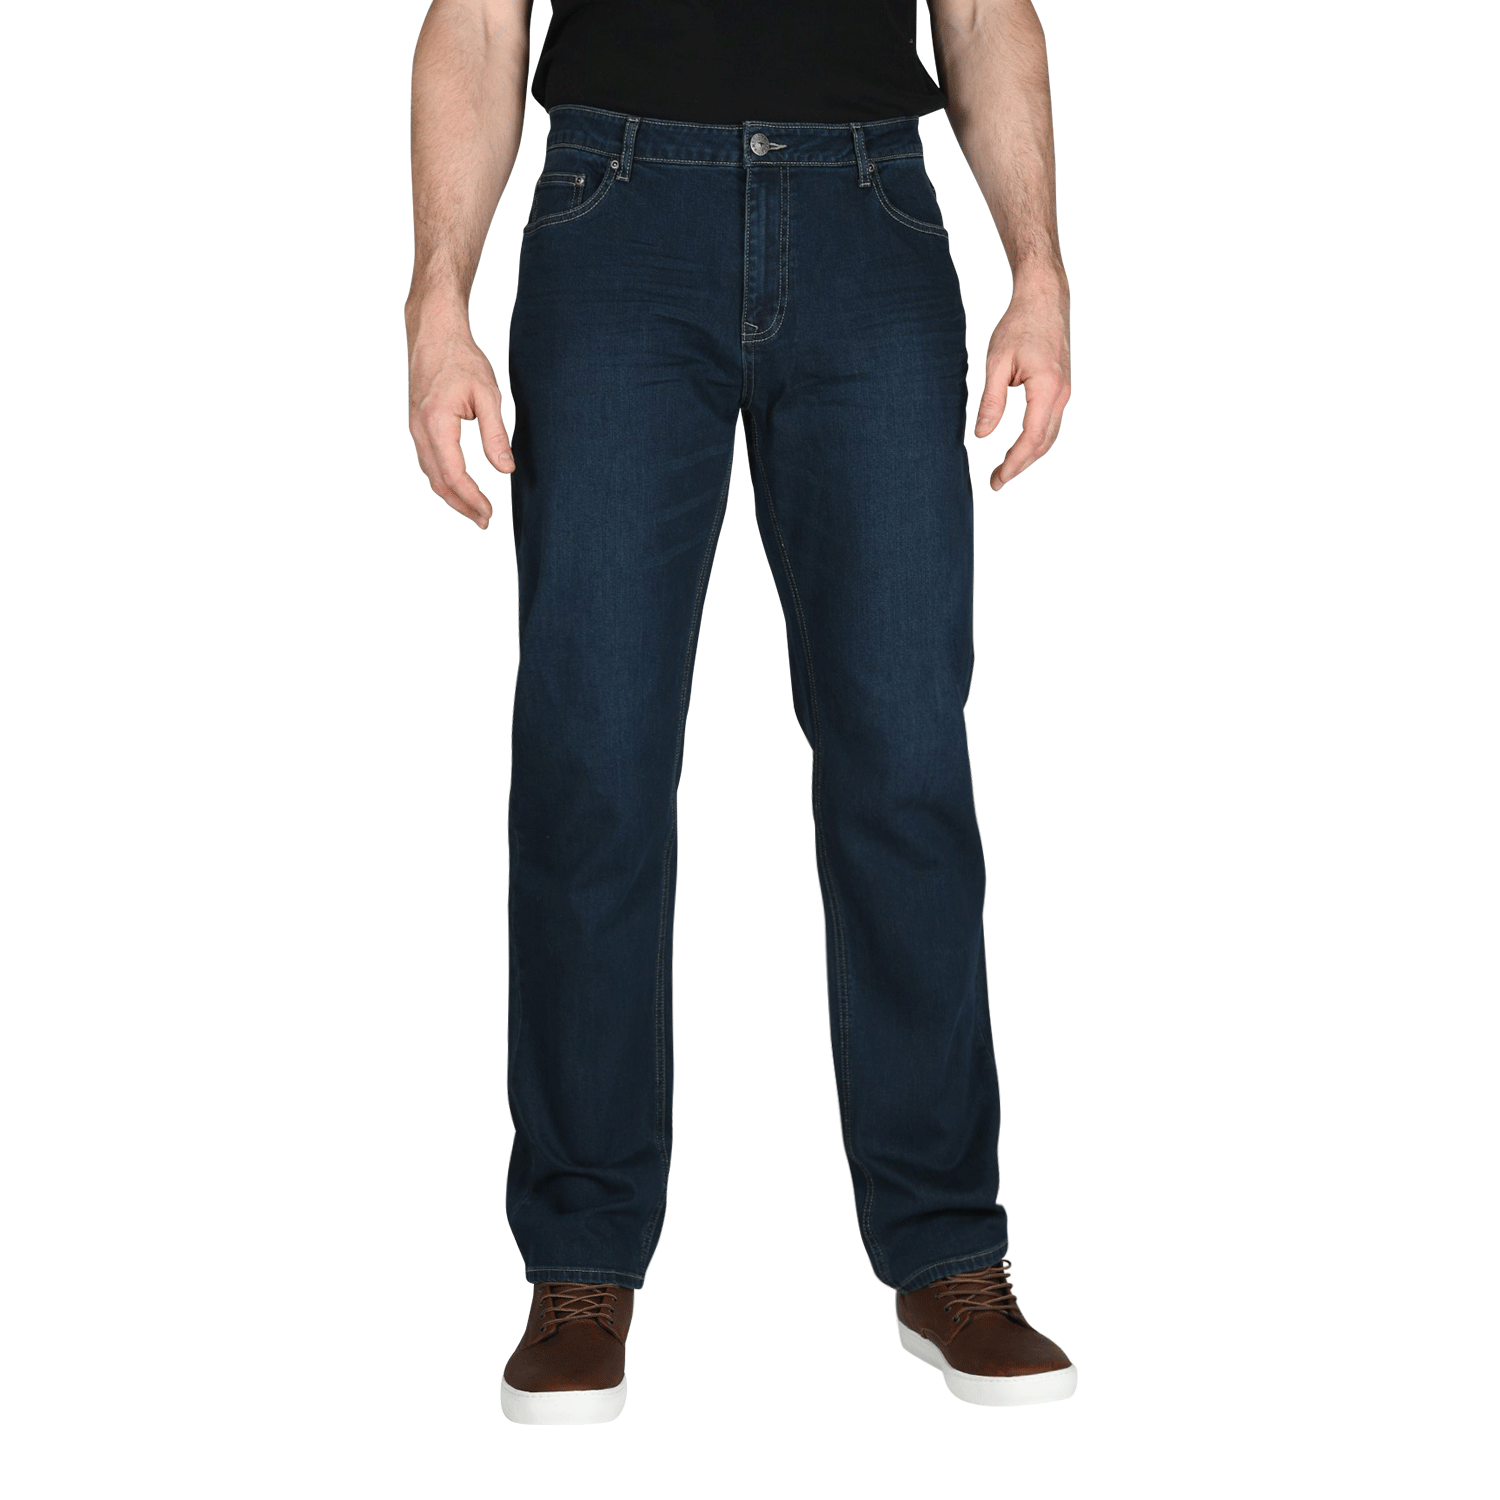 Mason SEMI-RELAXED Men's Tall Jeans in Blue Steel